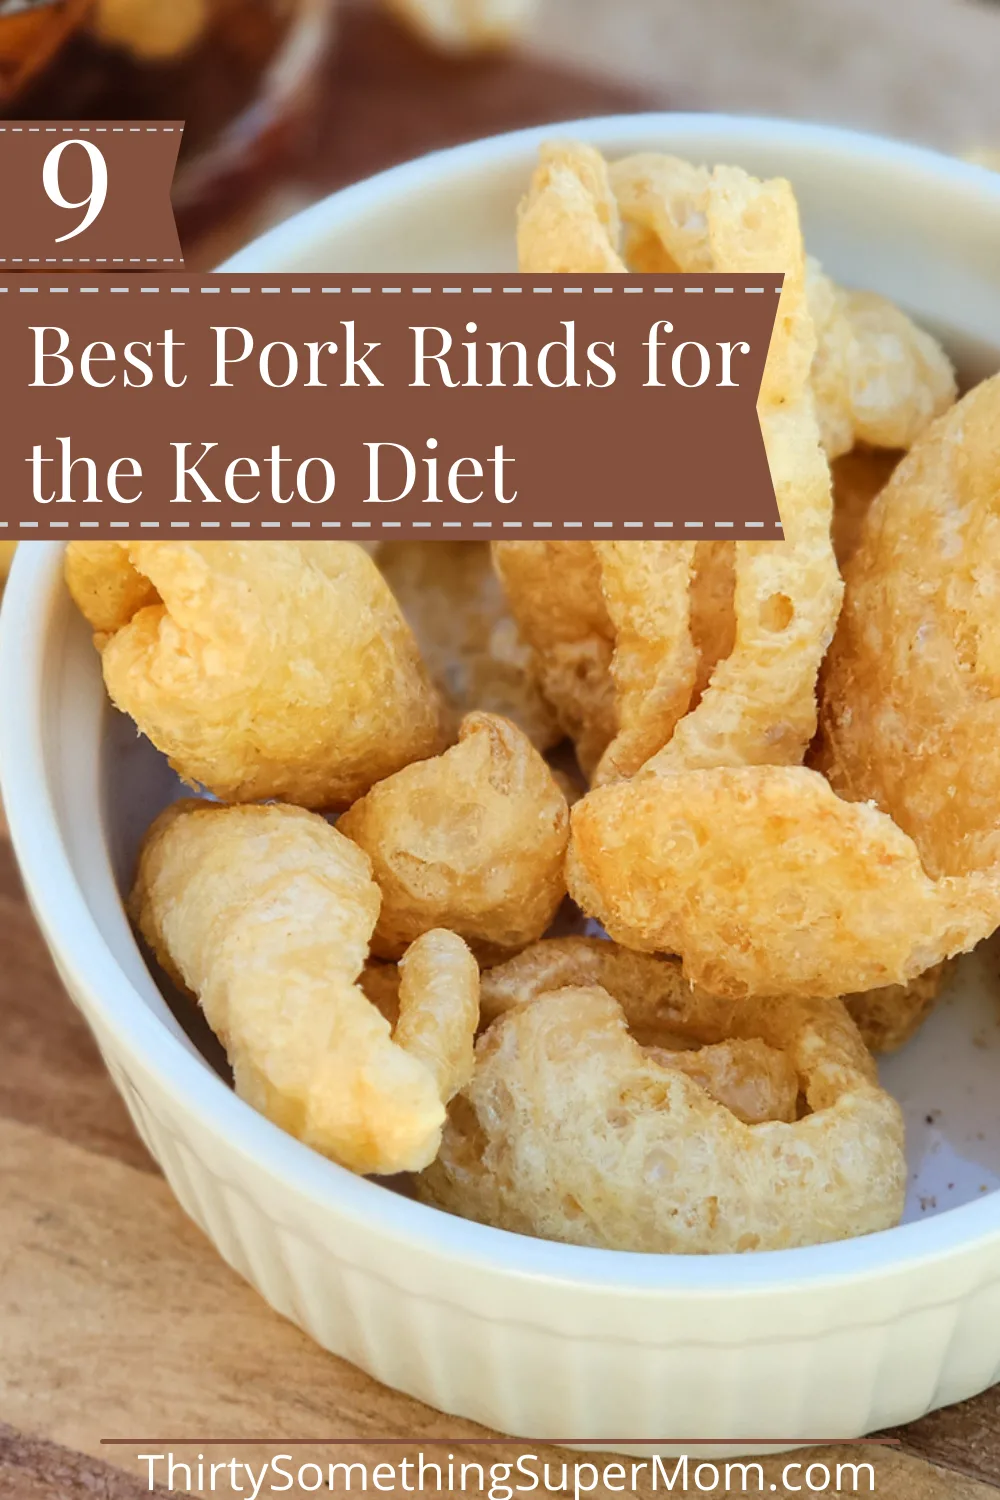 https://thirtysomethingsupermom.com/wp-content/uploads/2021/10/Best-Pork-Rinds-for-the-Keto-Diet-.png.webp